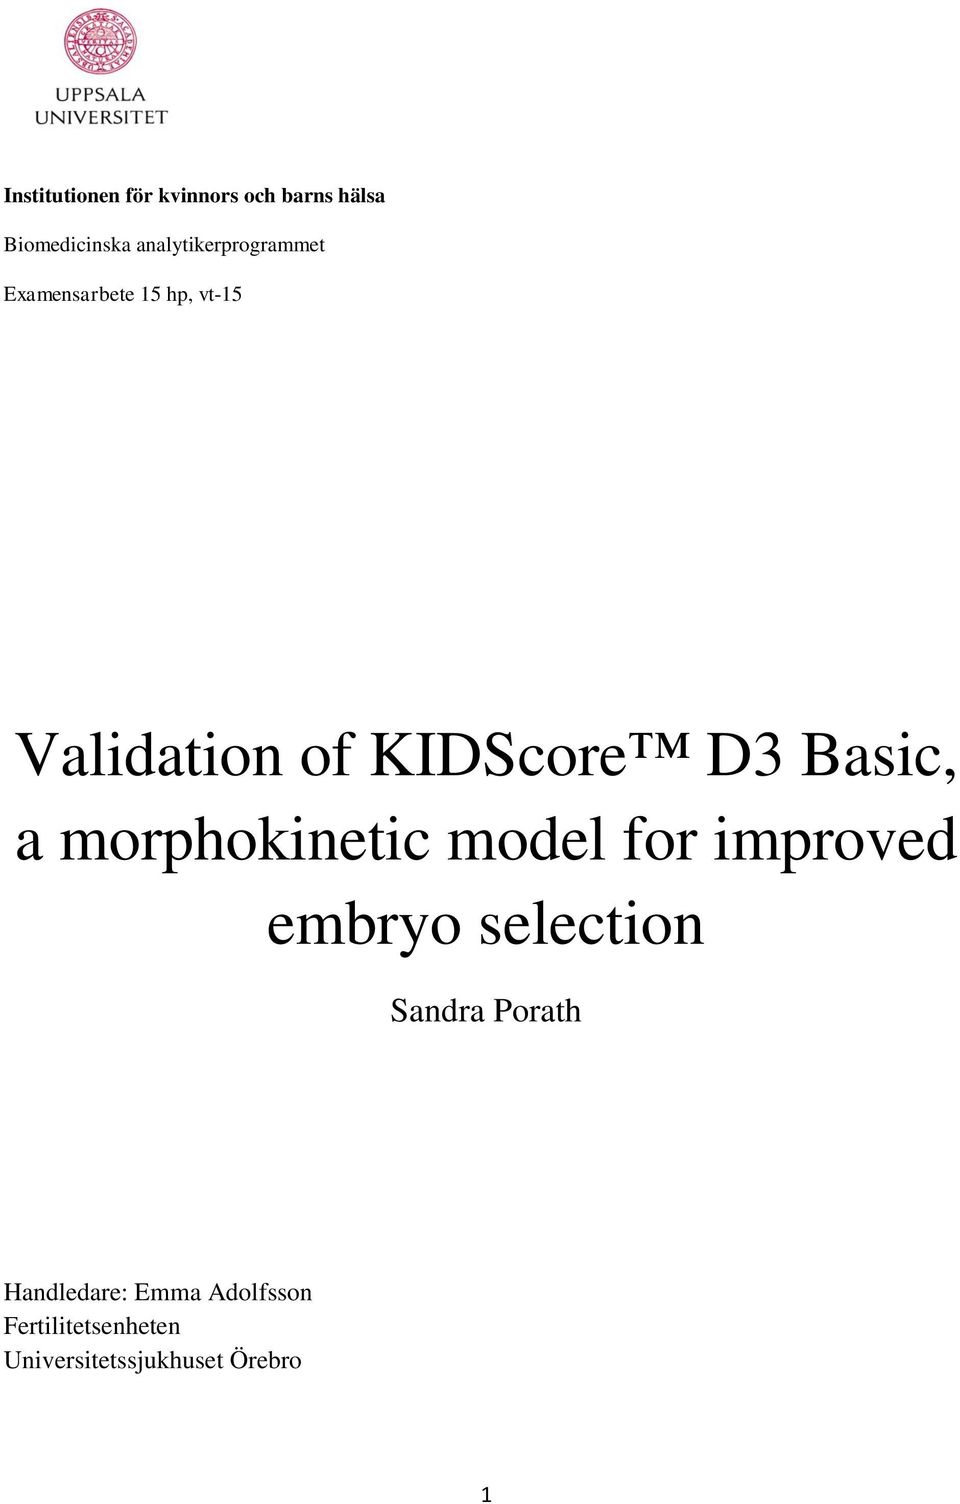 KIDScore D3 Basic, a morphokinetic model for improved embryo